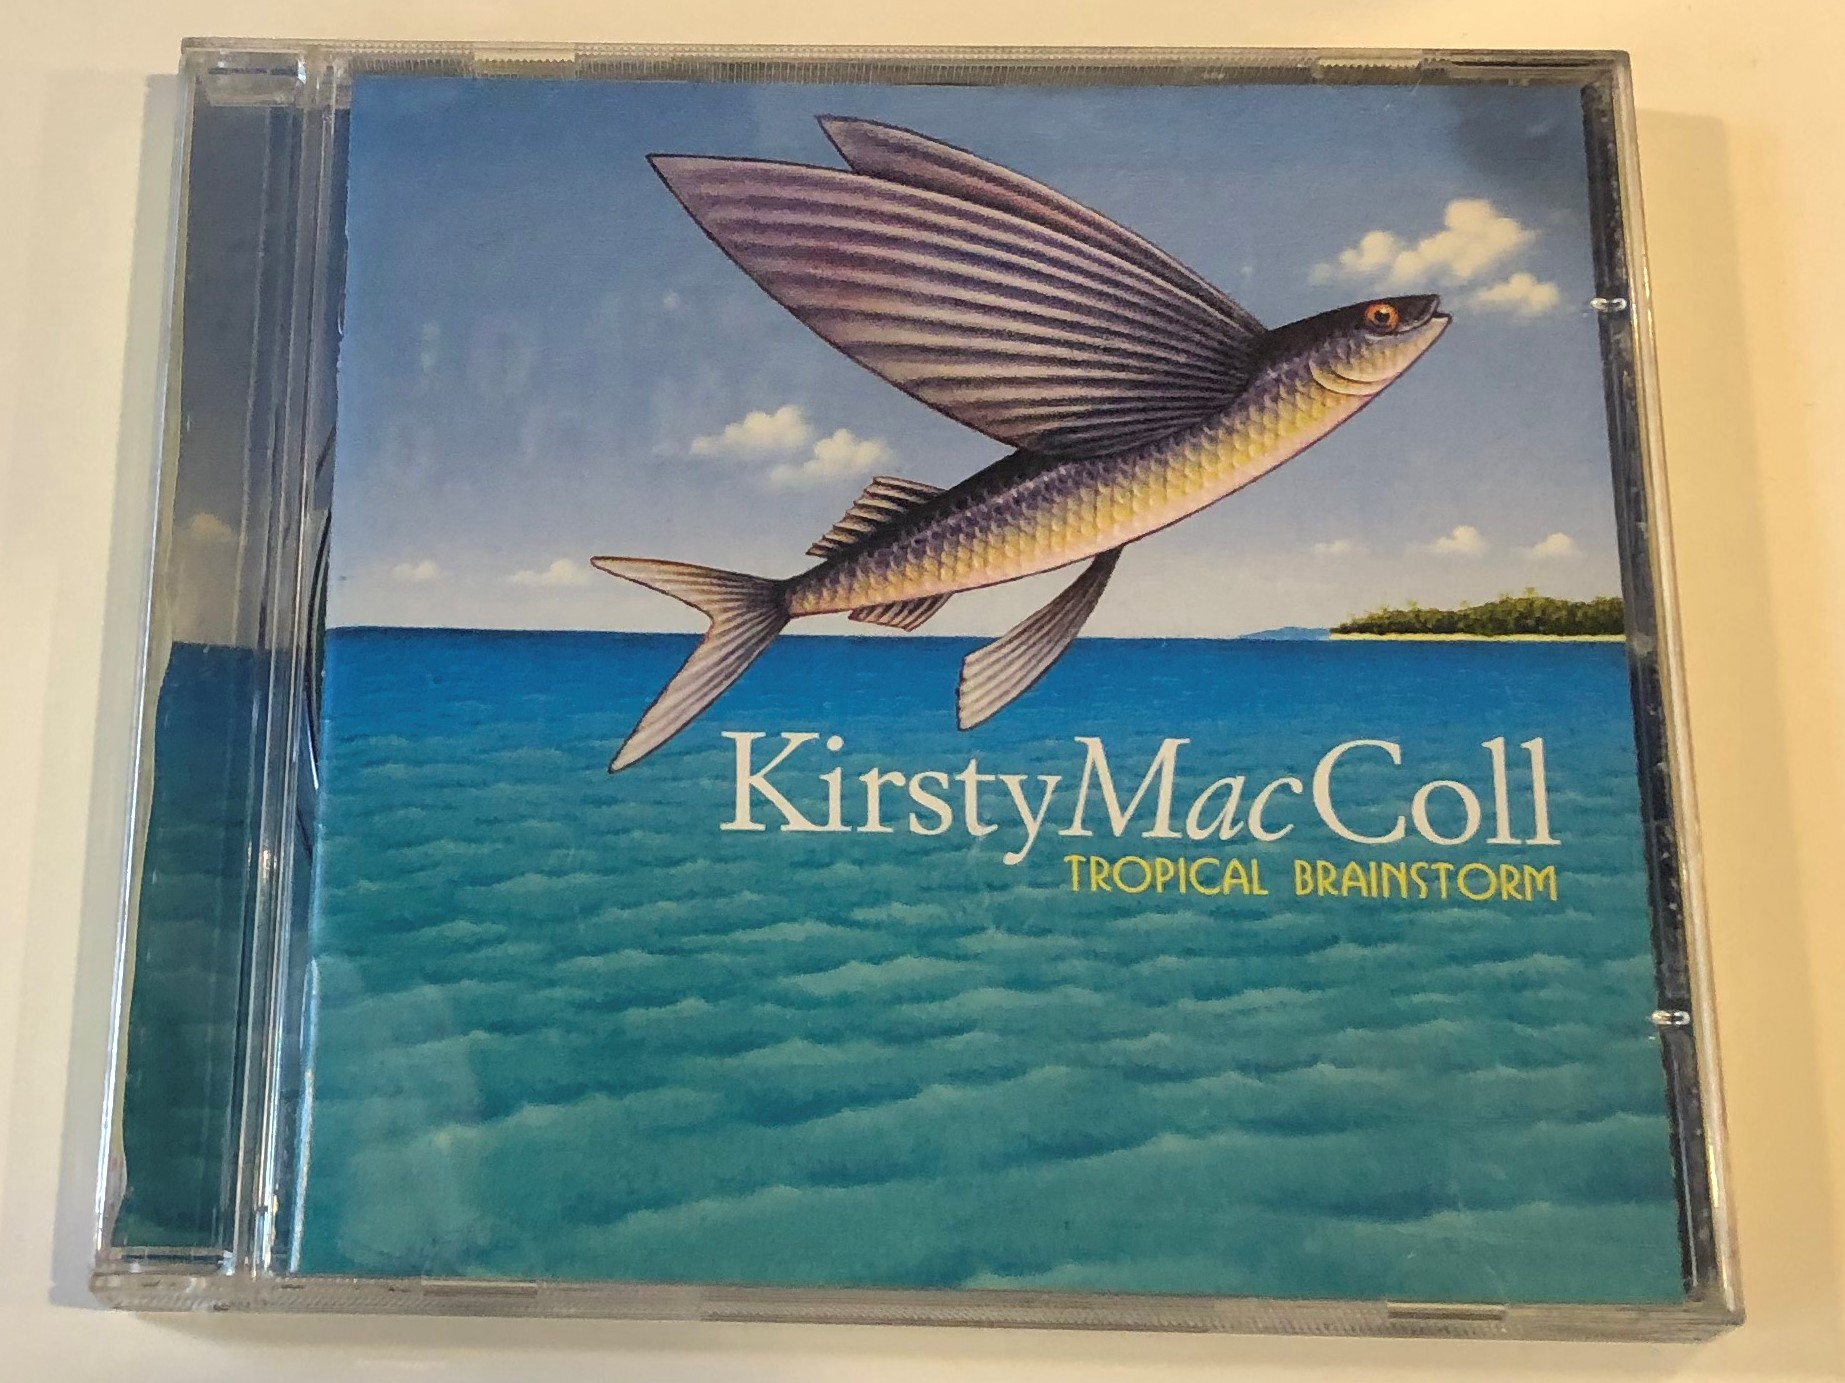 kirsty-maccoll-tropical-brainstorm-v2-audio-cd-2000-707.0987-1-.jpg